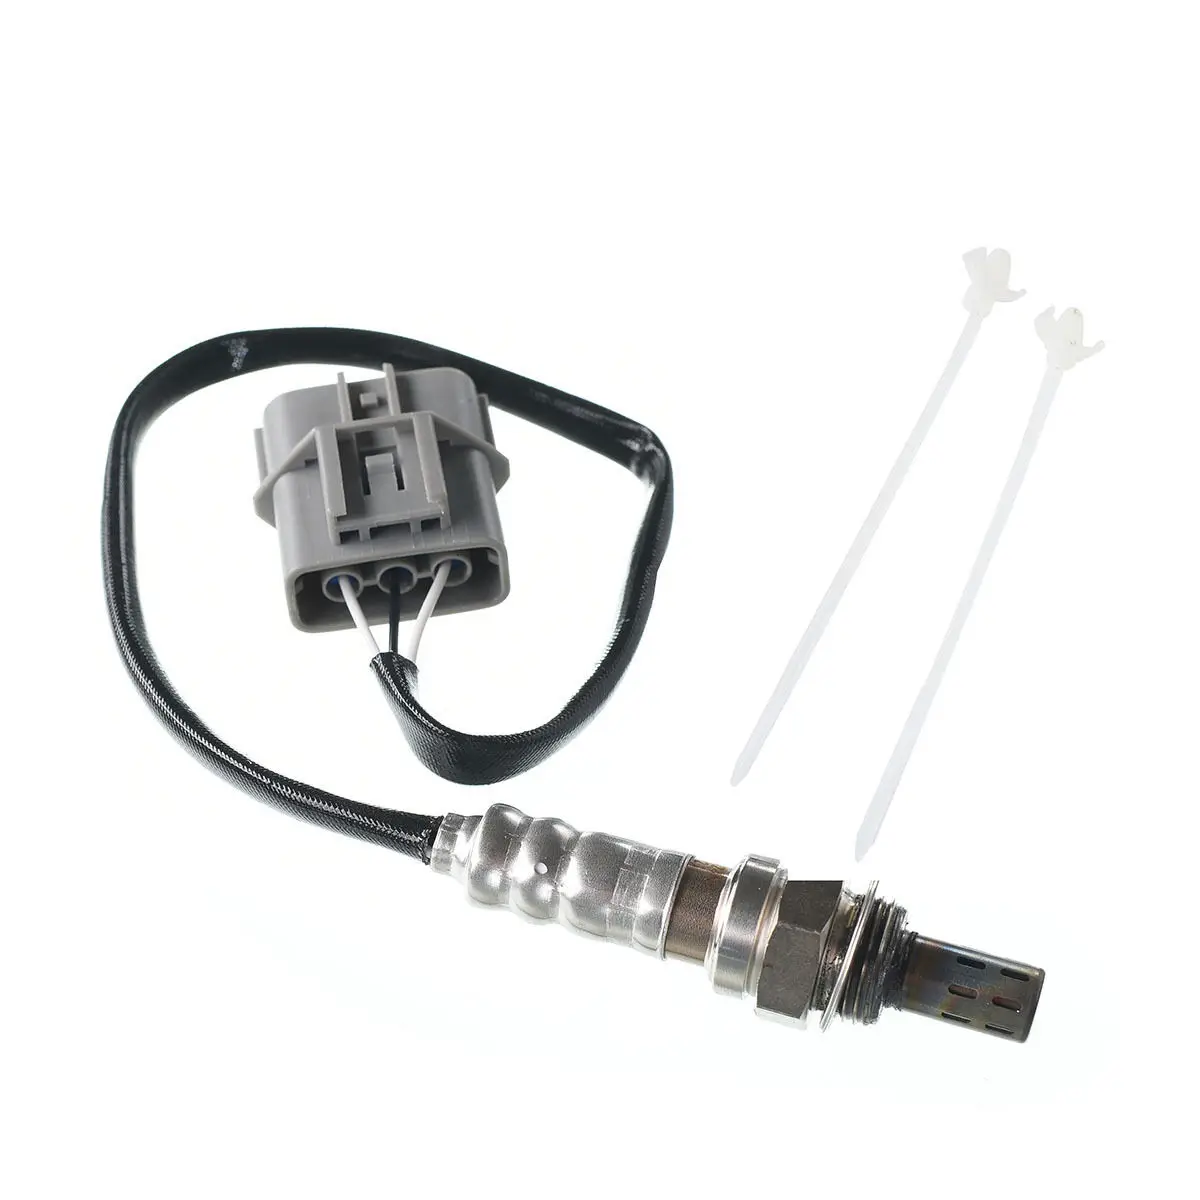 

Kbkyawy O2 Oxygen Sensor for Nissan Altima Frontier Maxima G20 I30 Sentra 00-01 Upstream